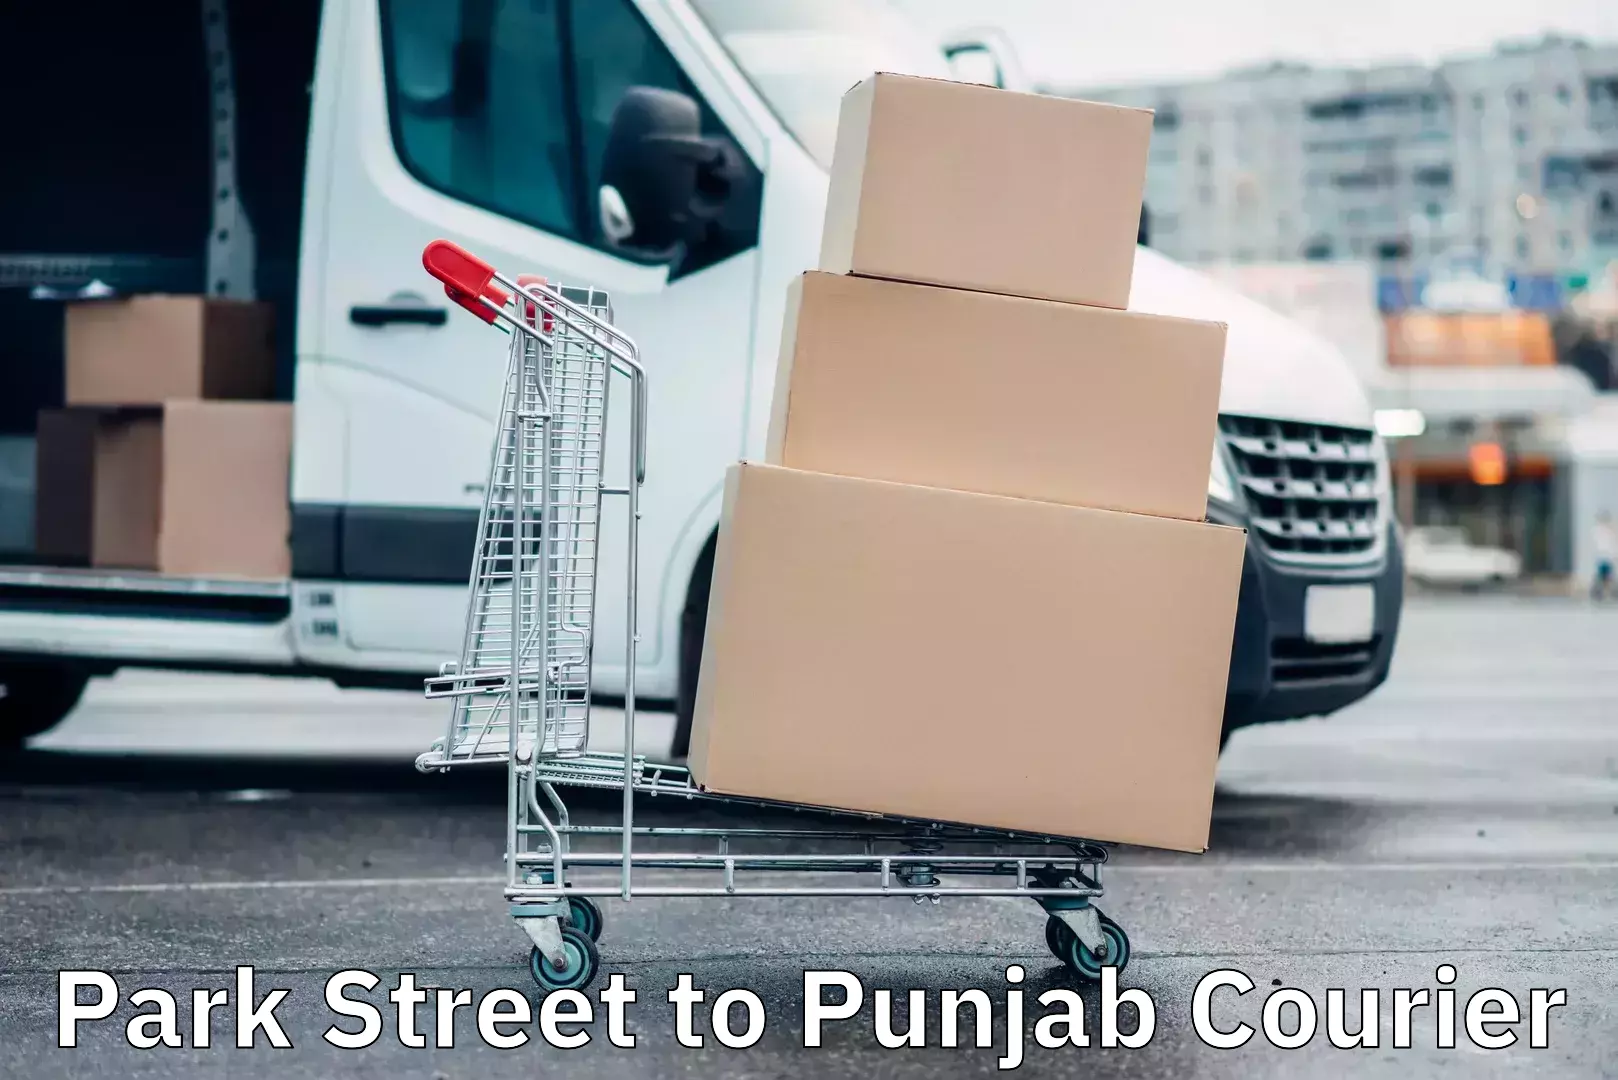 Parcel service for businesses Park Street to Punjab